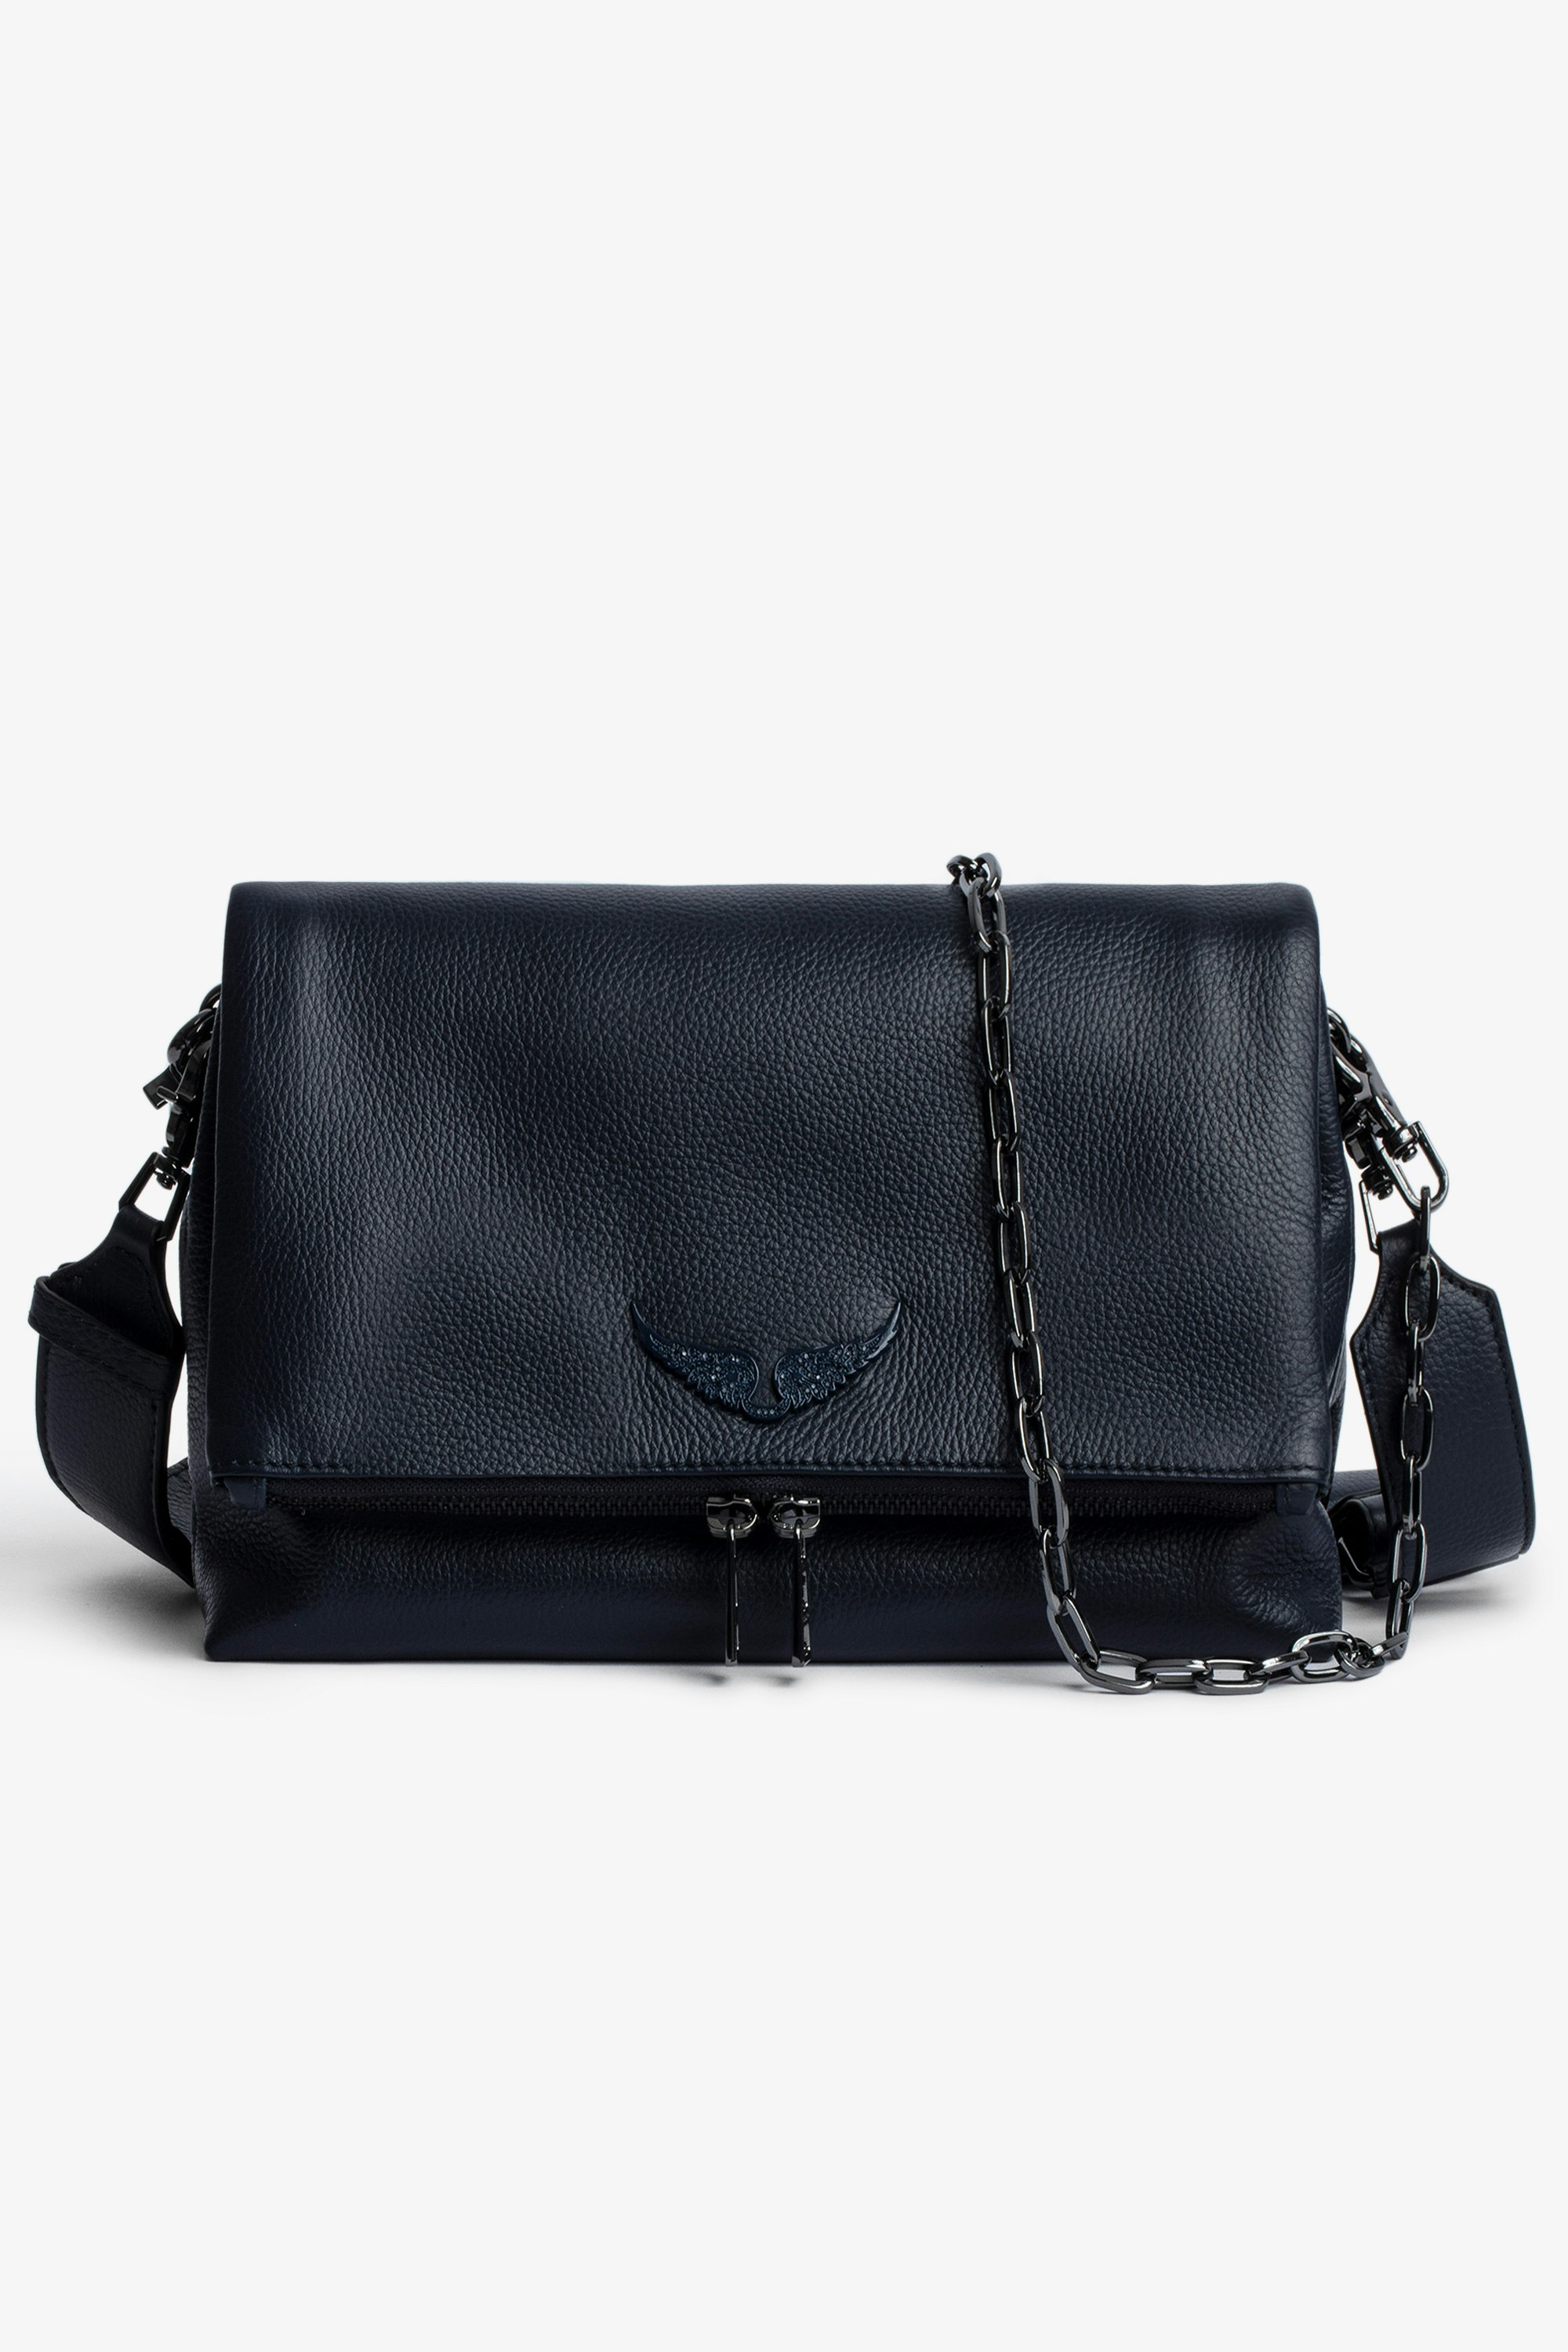 Rocky バッグ Women’s Rocky bag in navy blue leather
